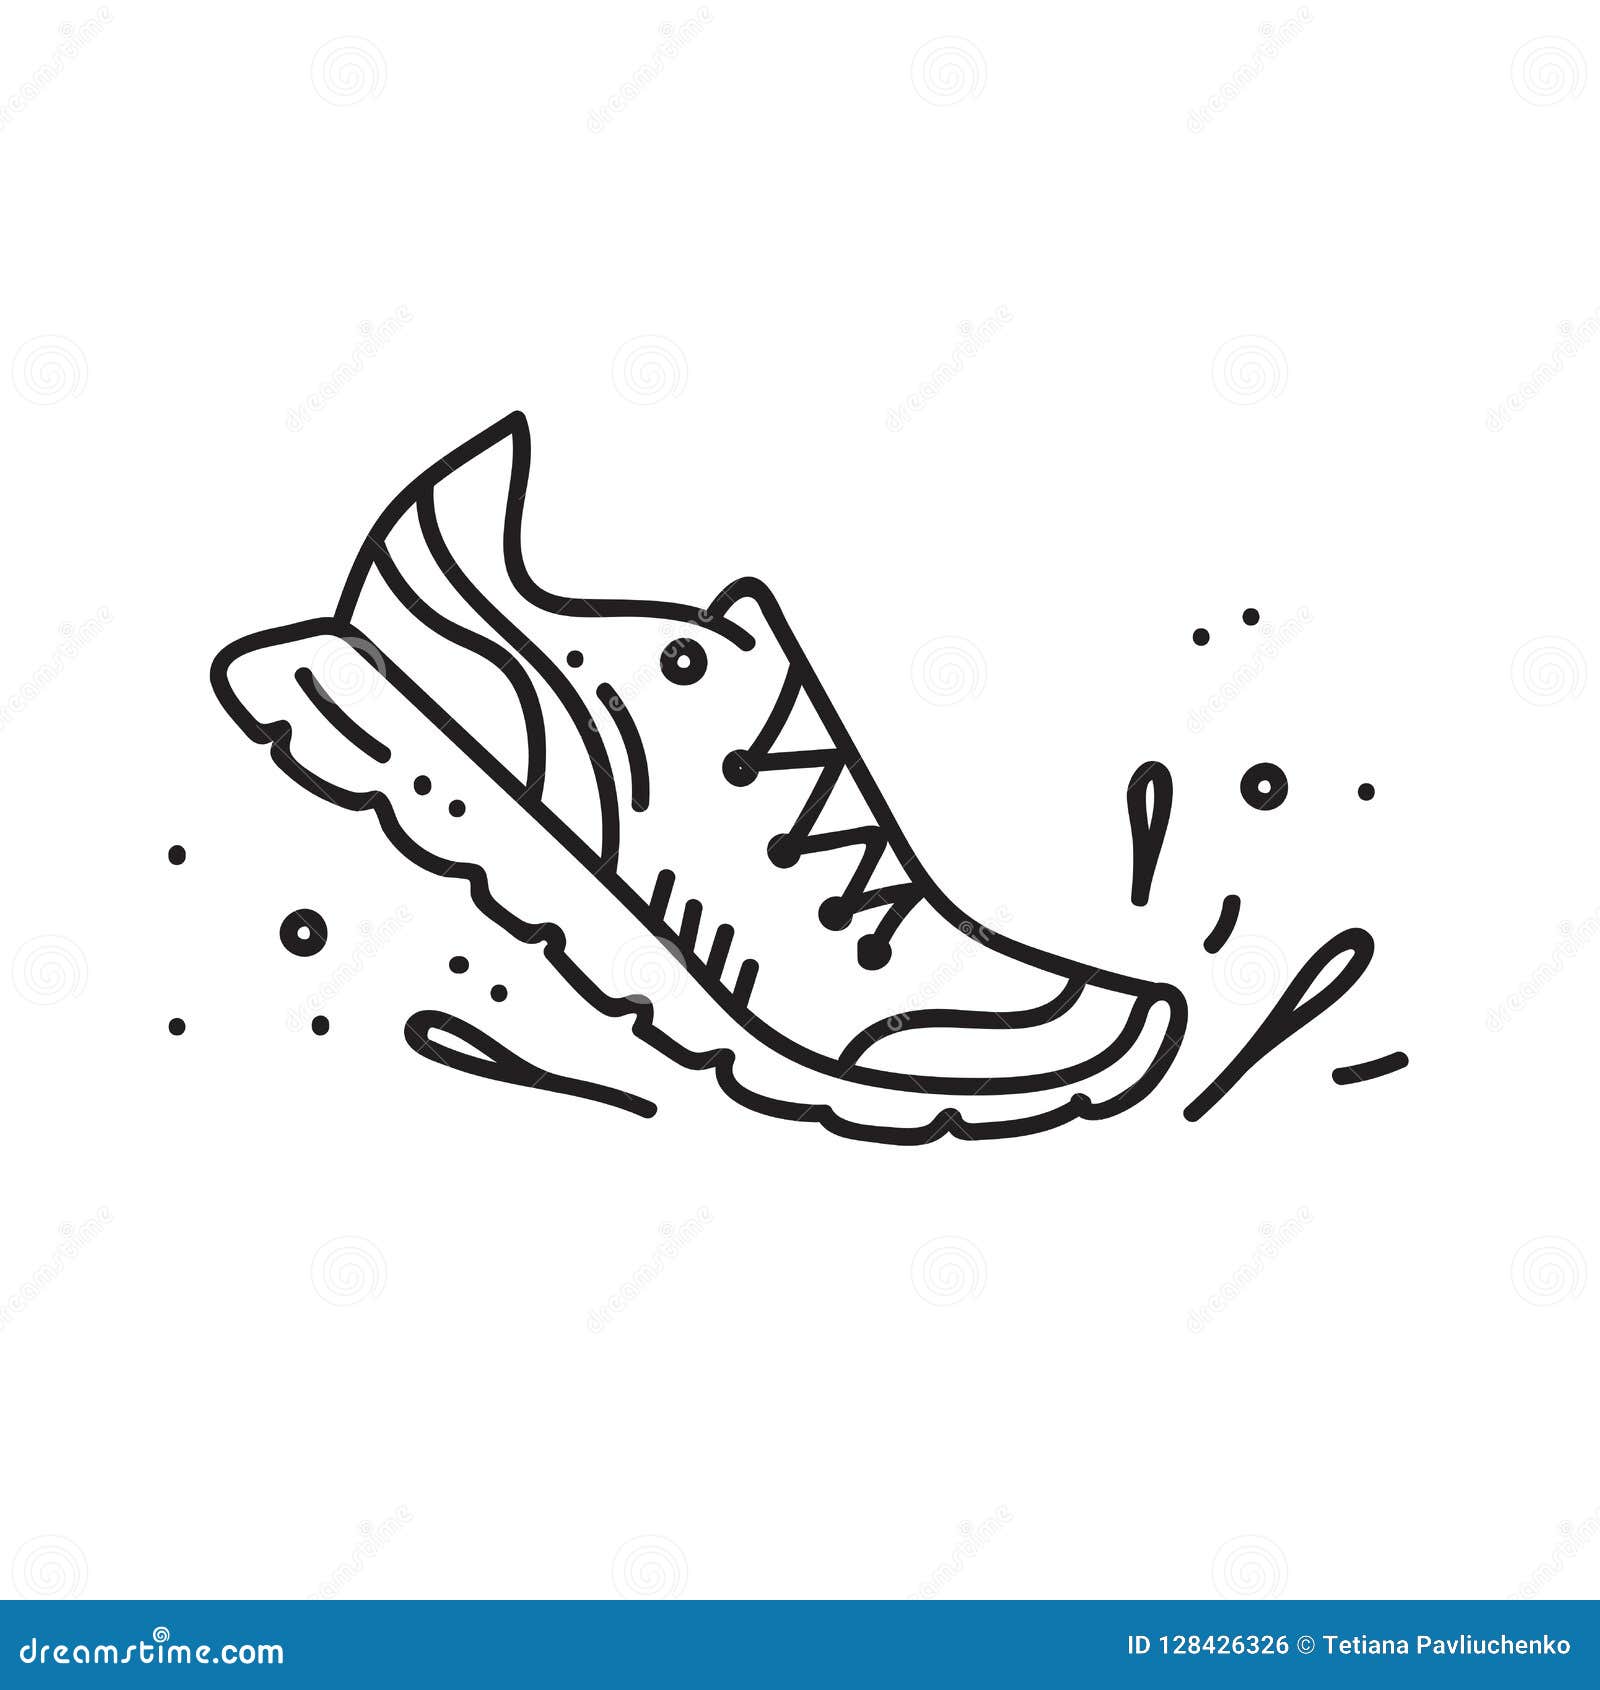 Premium Vector | Boots vector illustration brown men's shoes